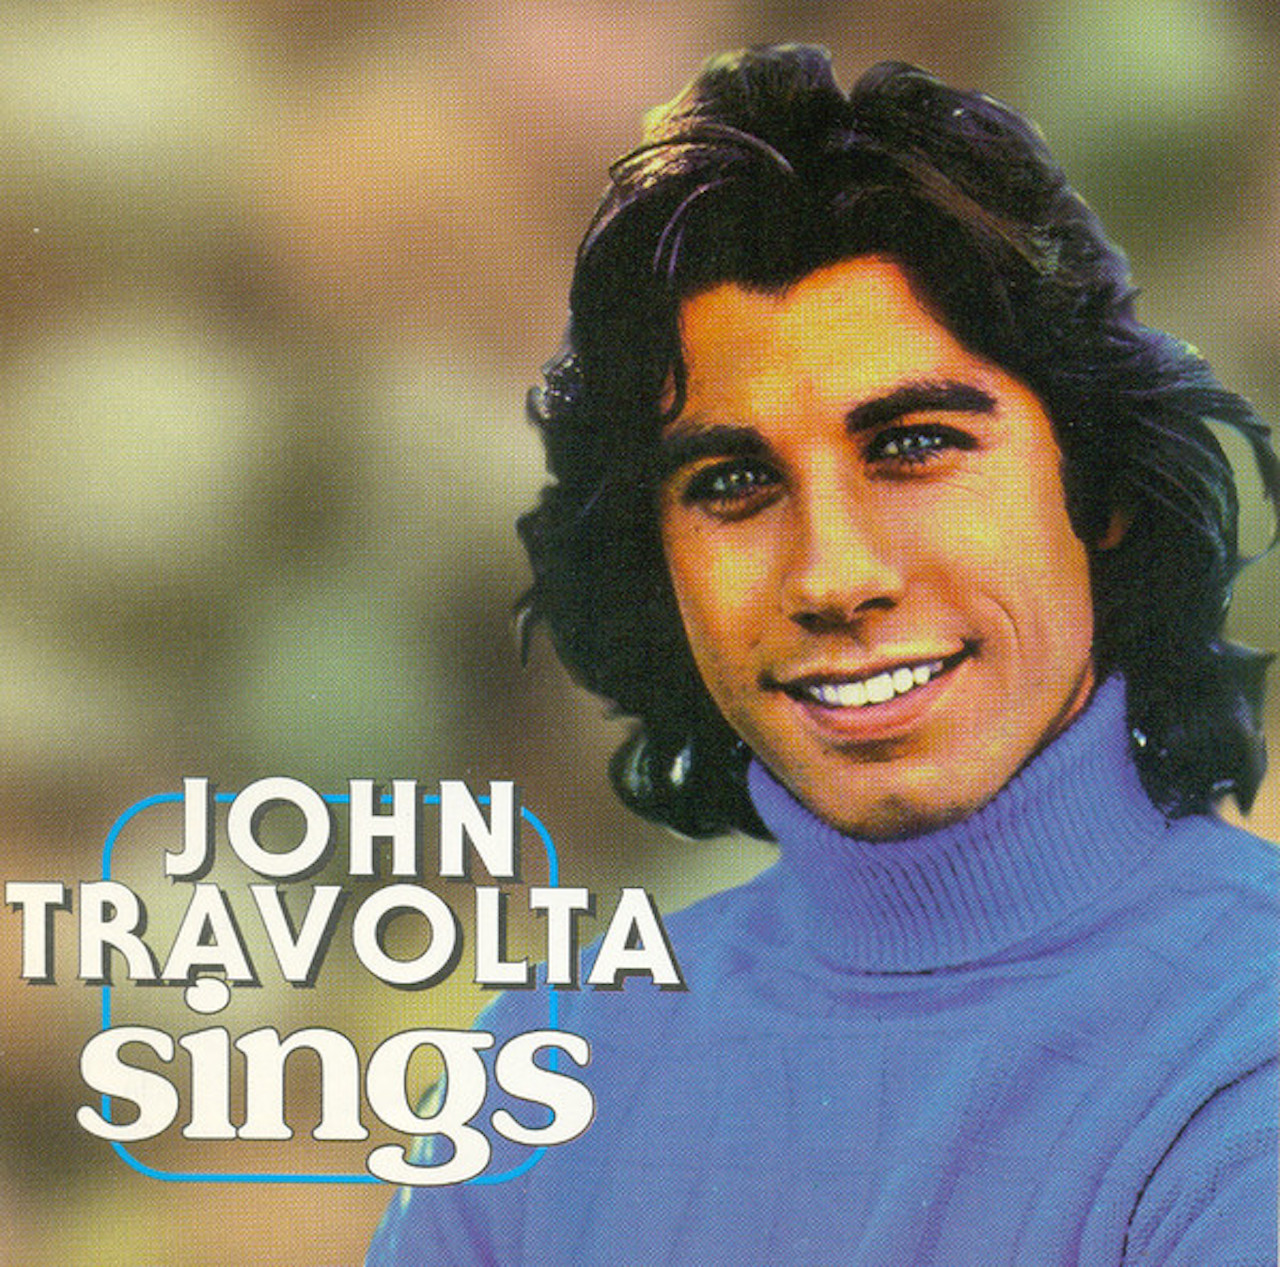 Travolta Sings. John sings